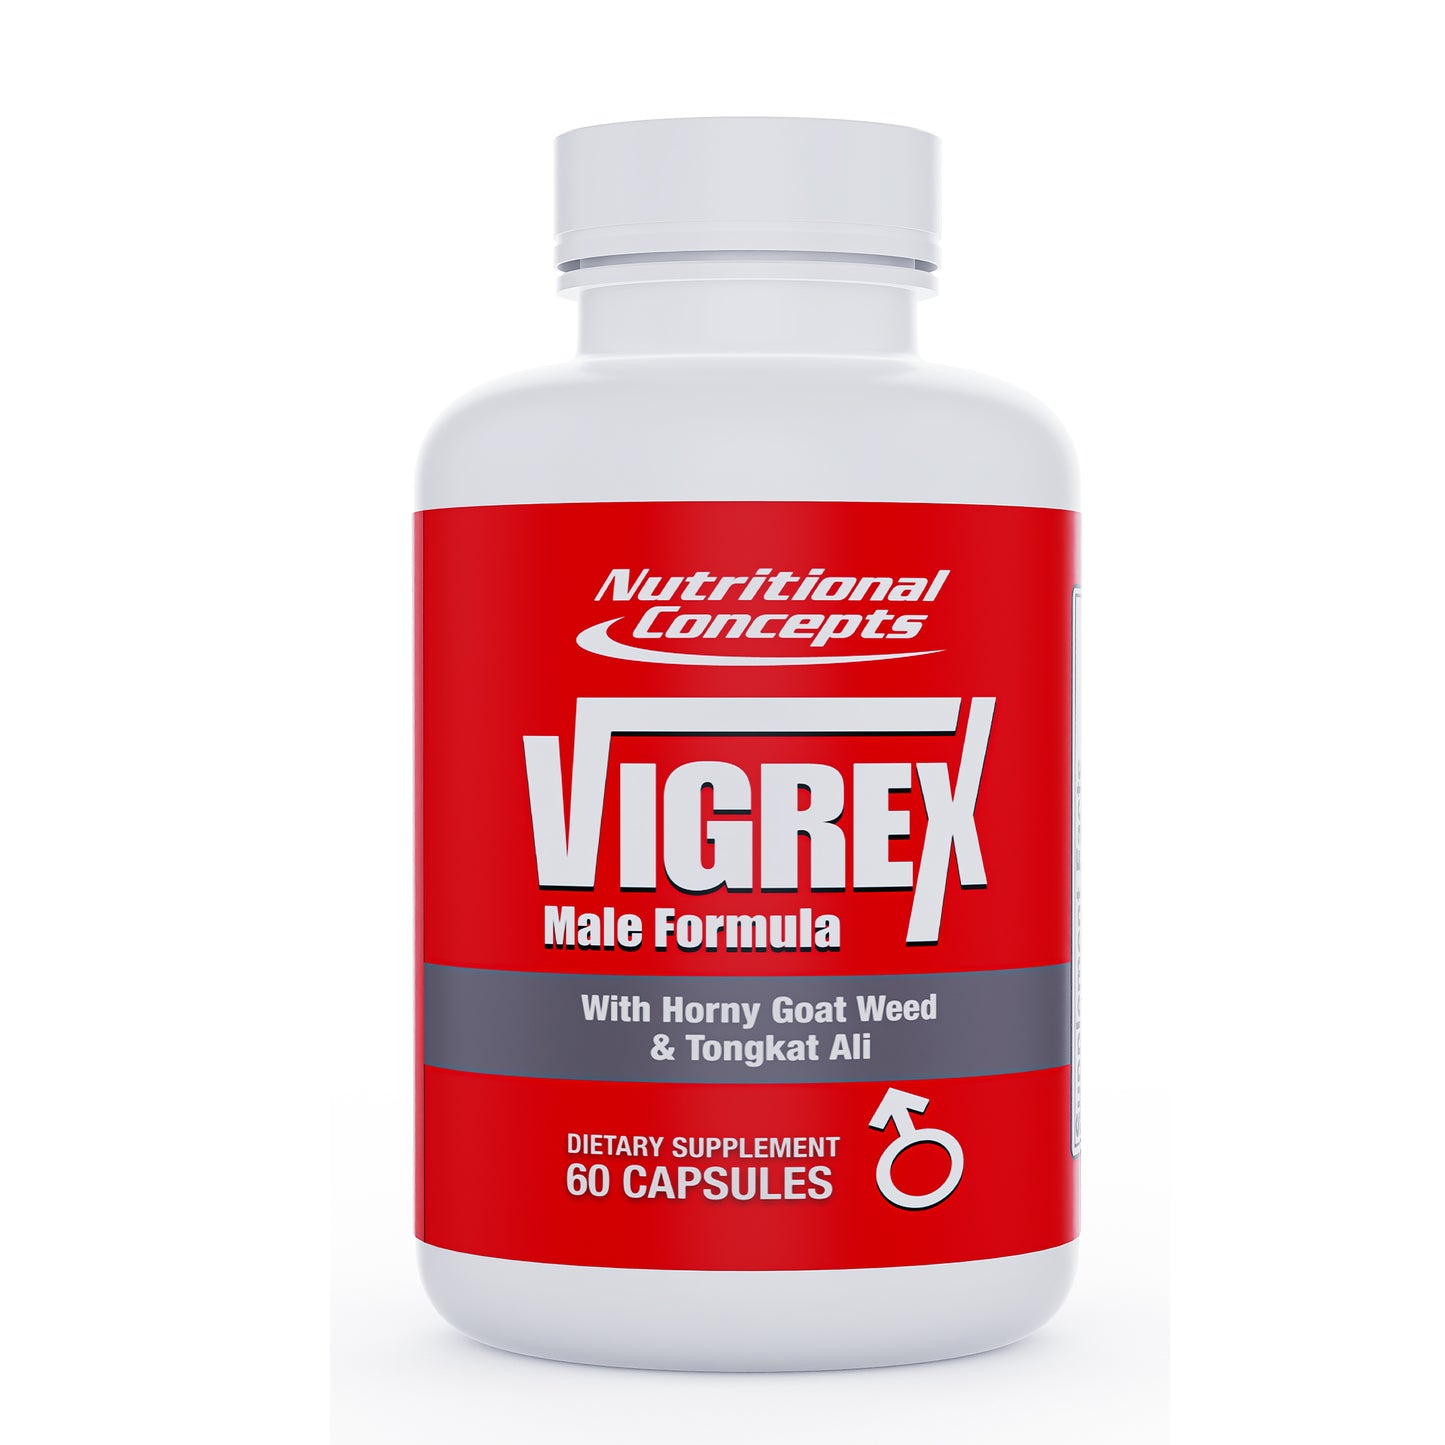 Nutritional Concepts Vigrex Male Formula - 60 Capsules